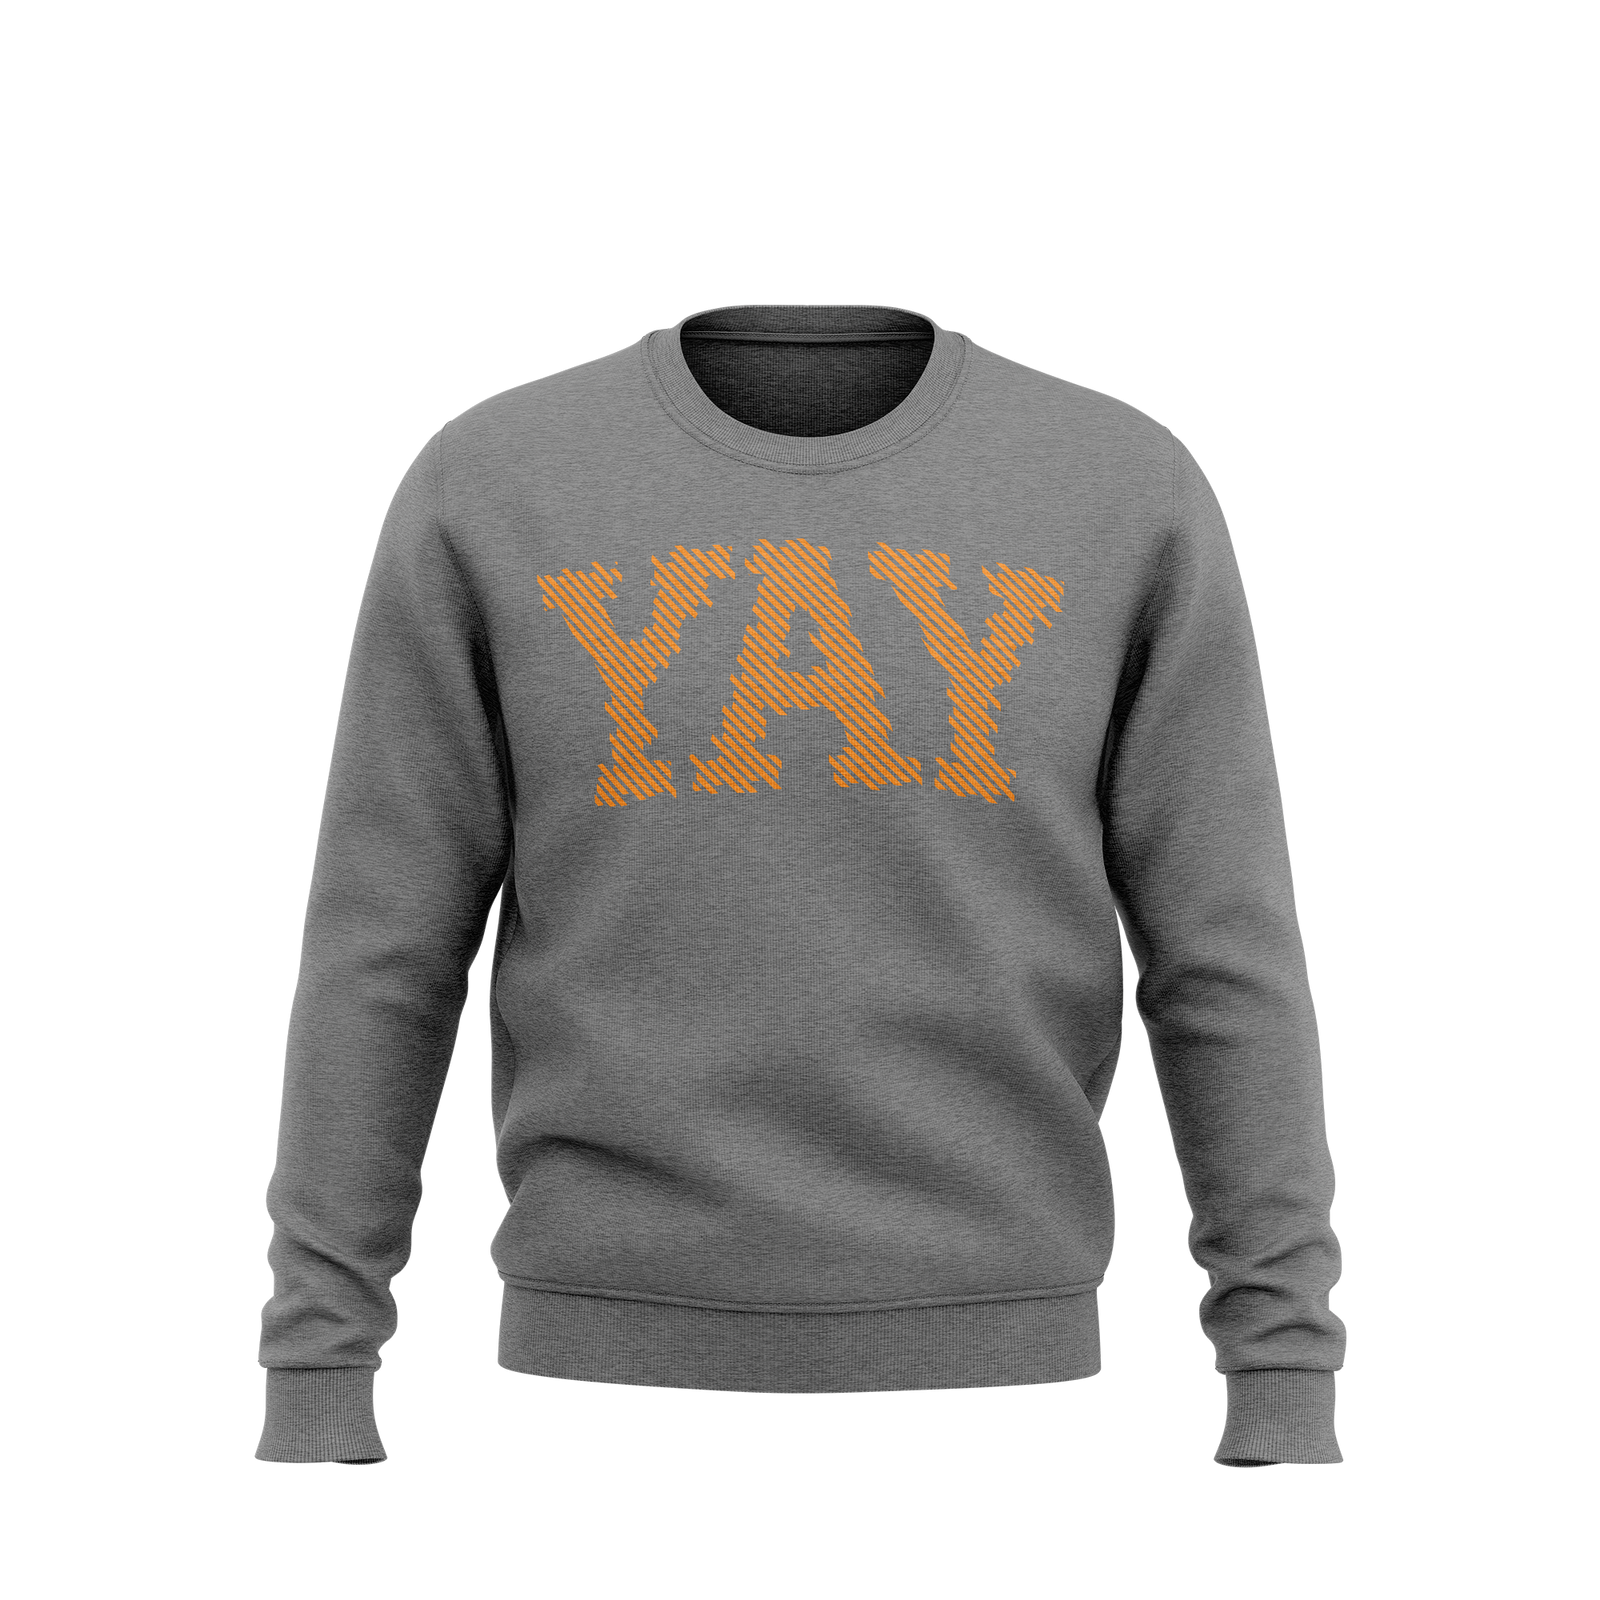 YAY Lines Crewneck Sweatshirt (Gray)